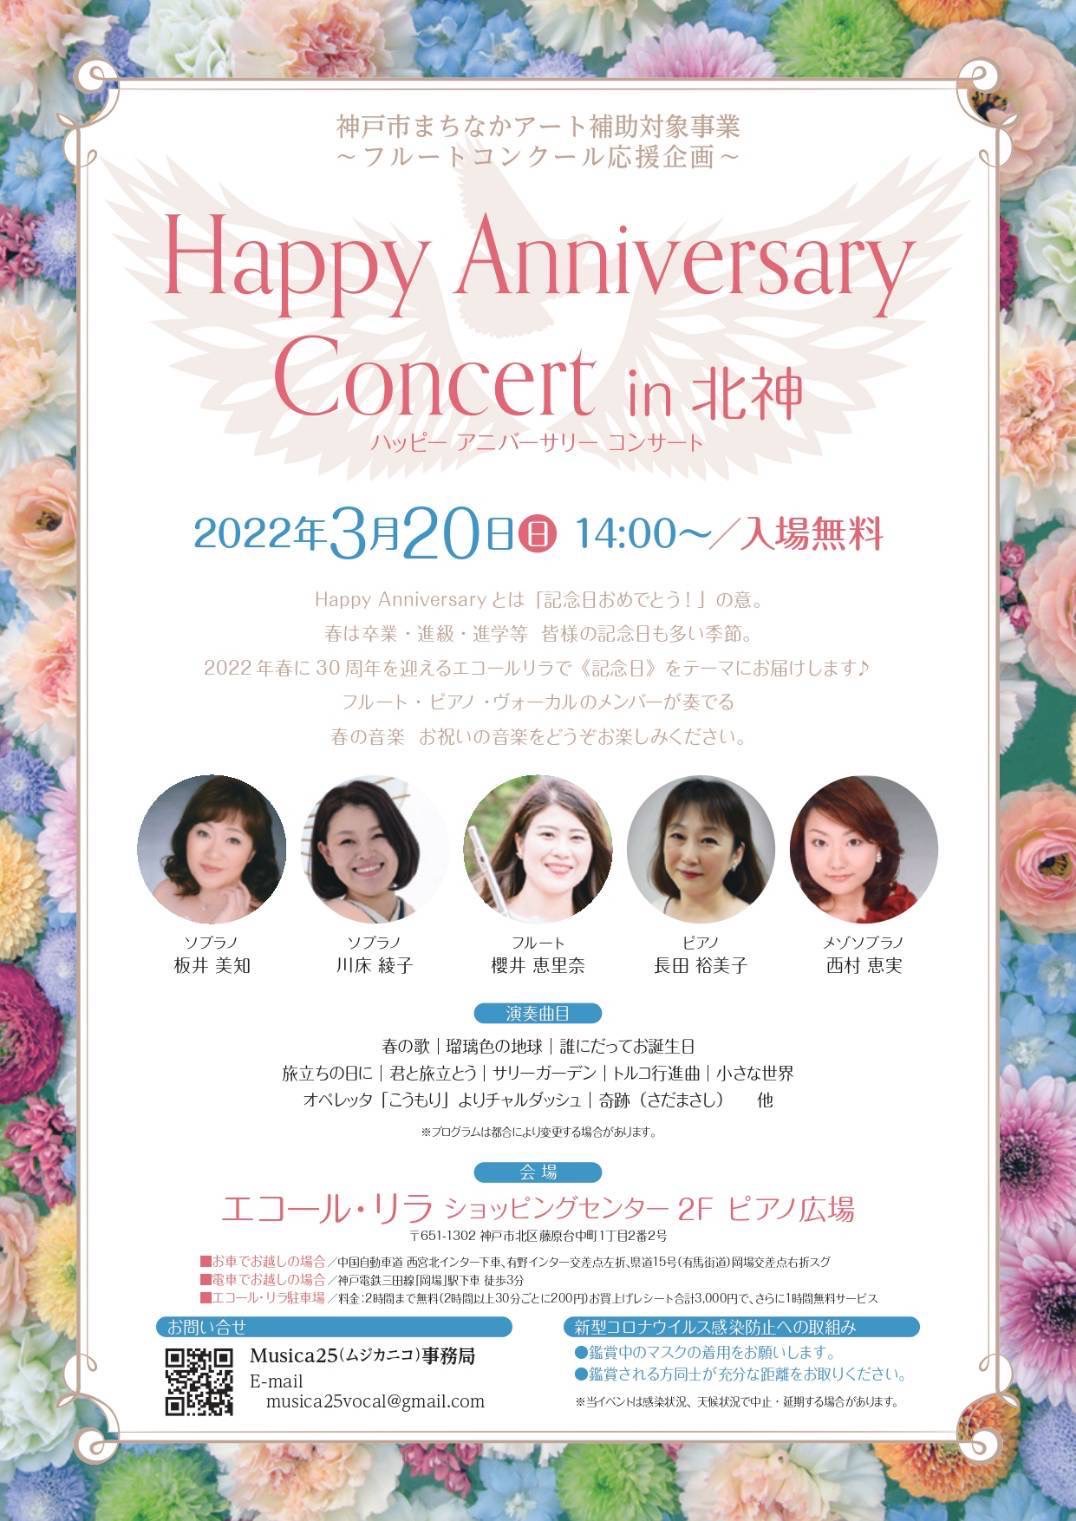 Happy Anniversary Concert in 北神1